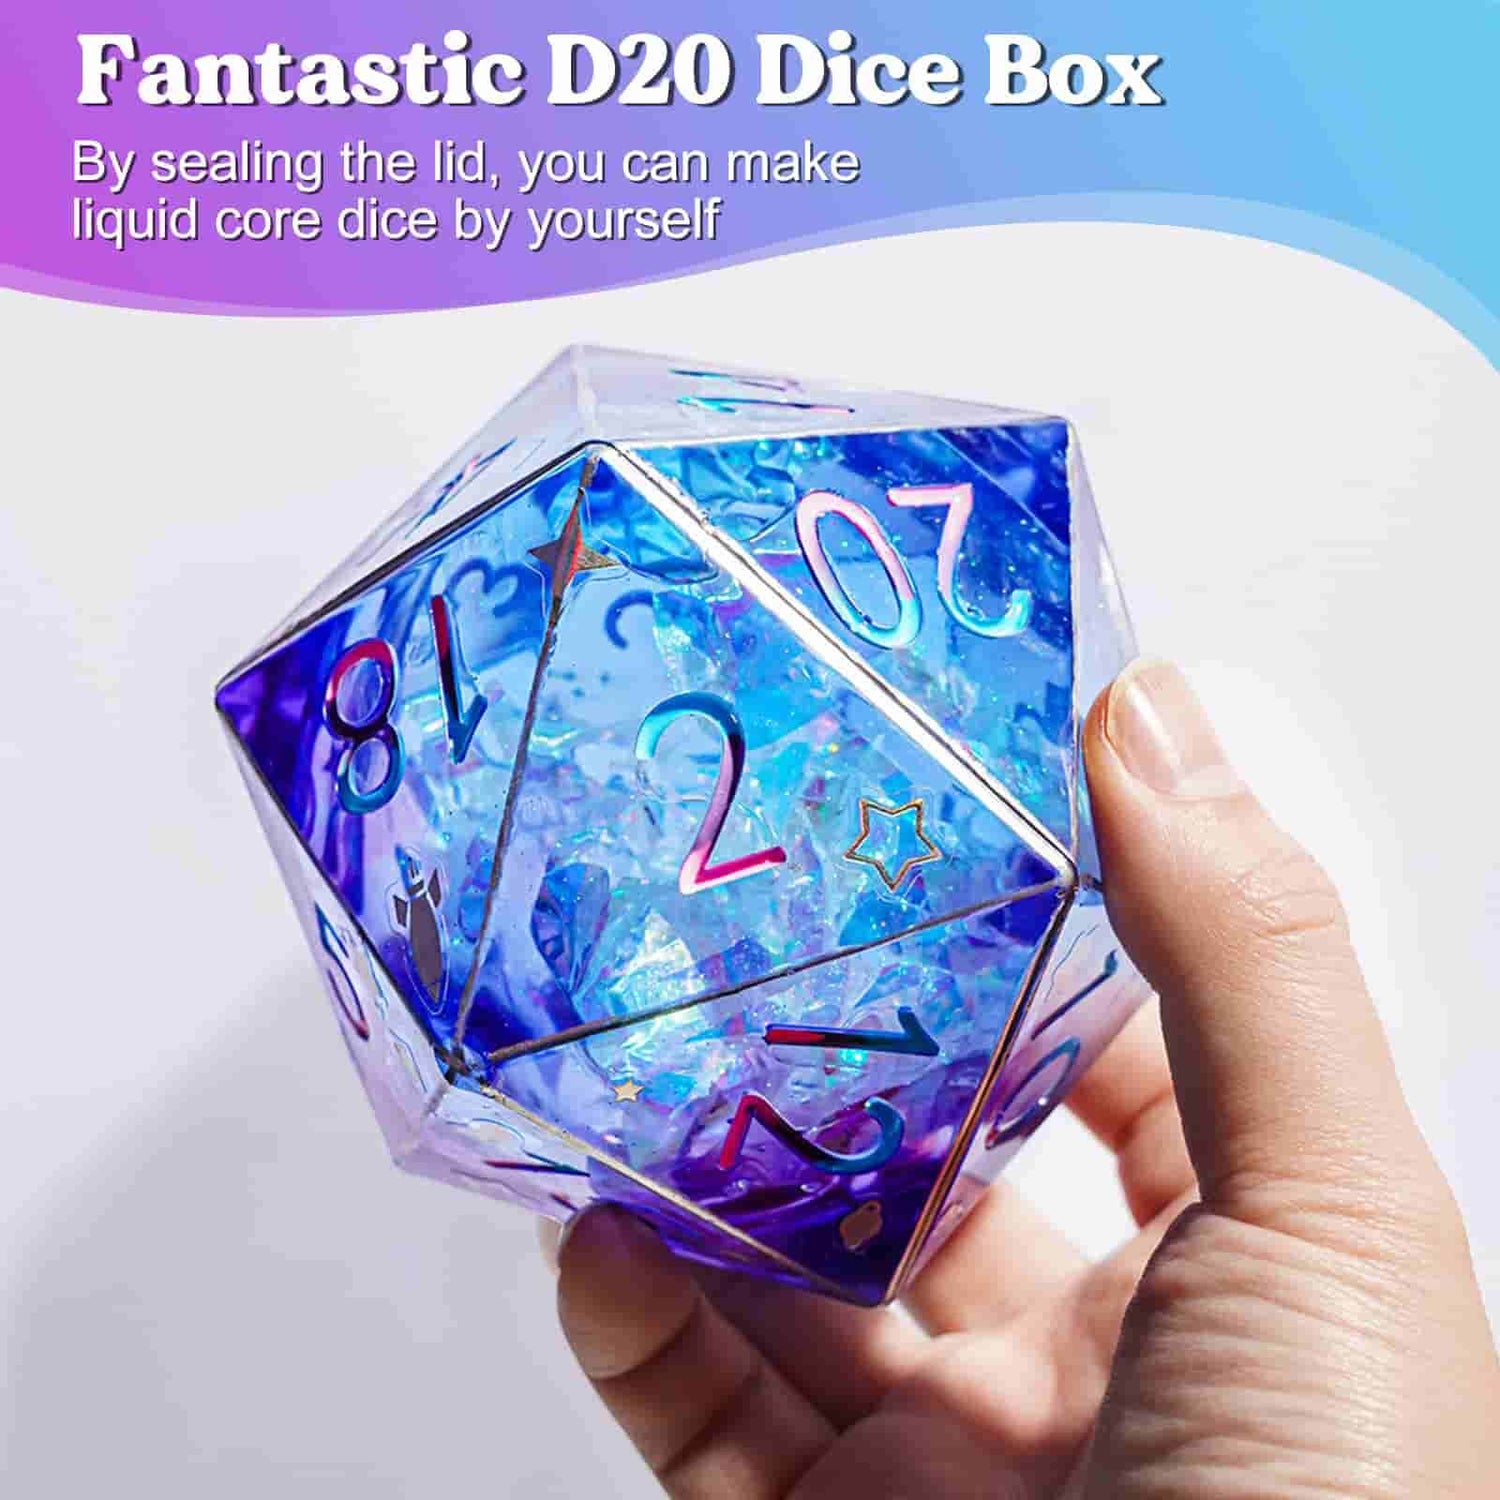 D20 dice ice mold